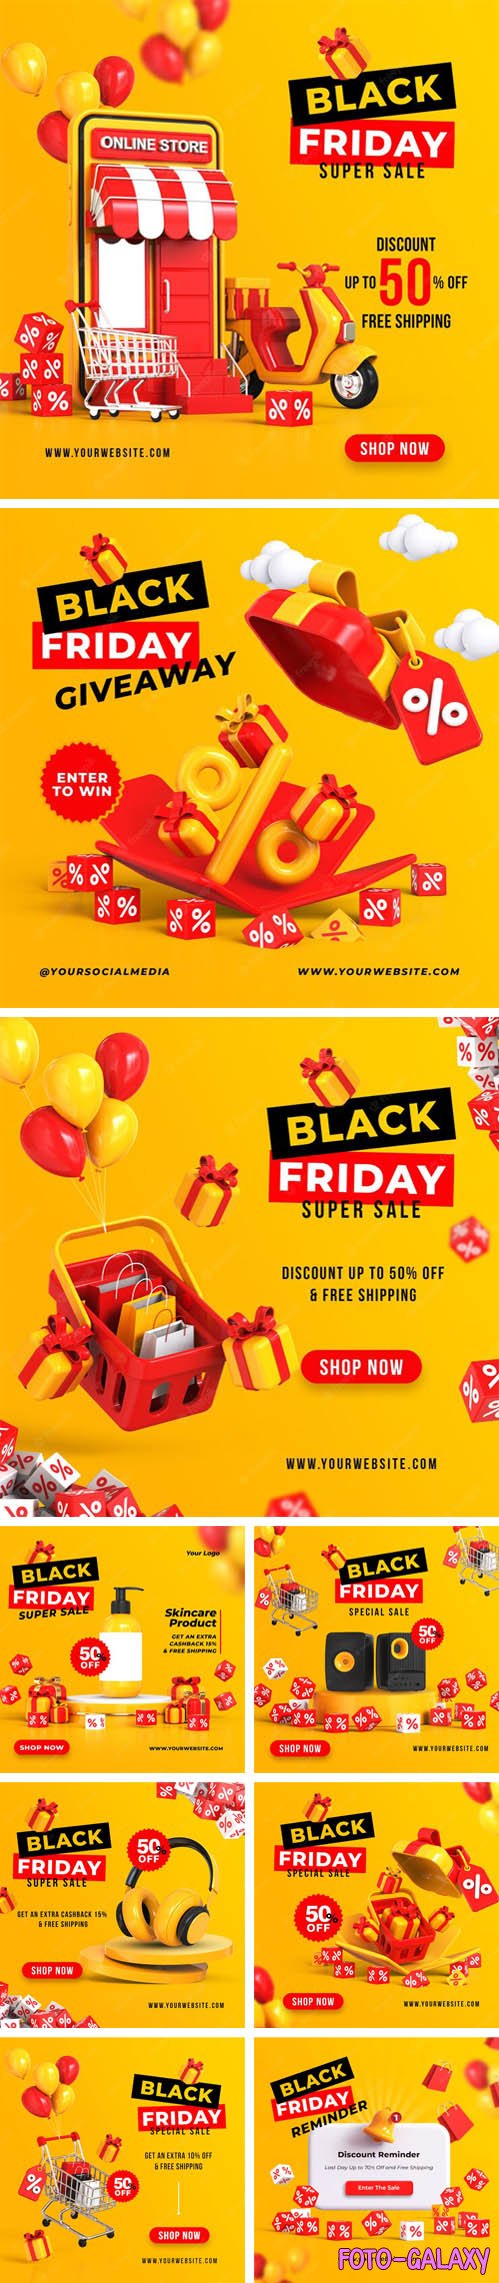 Black Friday Super Sale Social Media Posts PSD Templates Pack